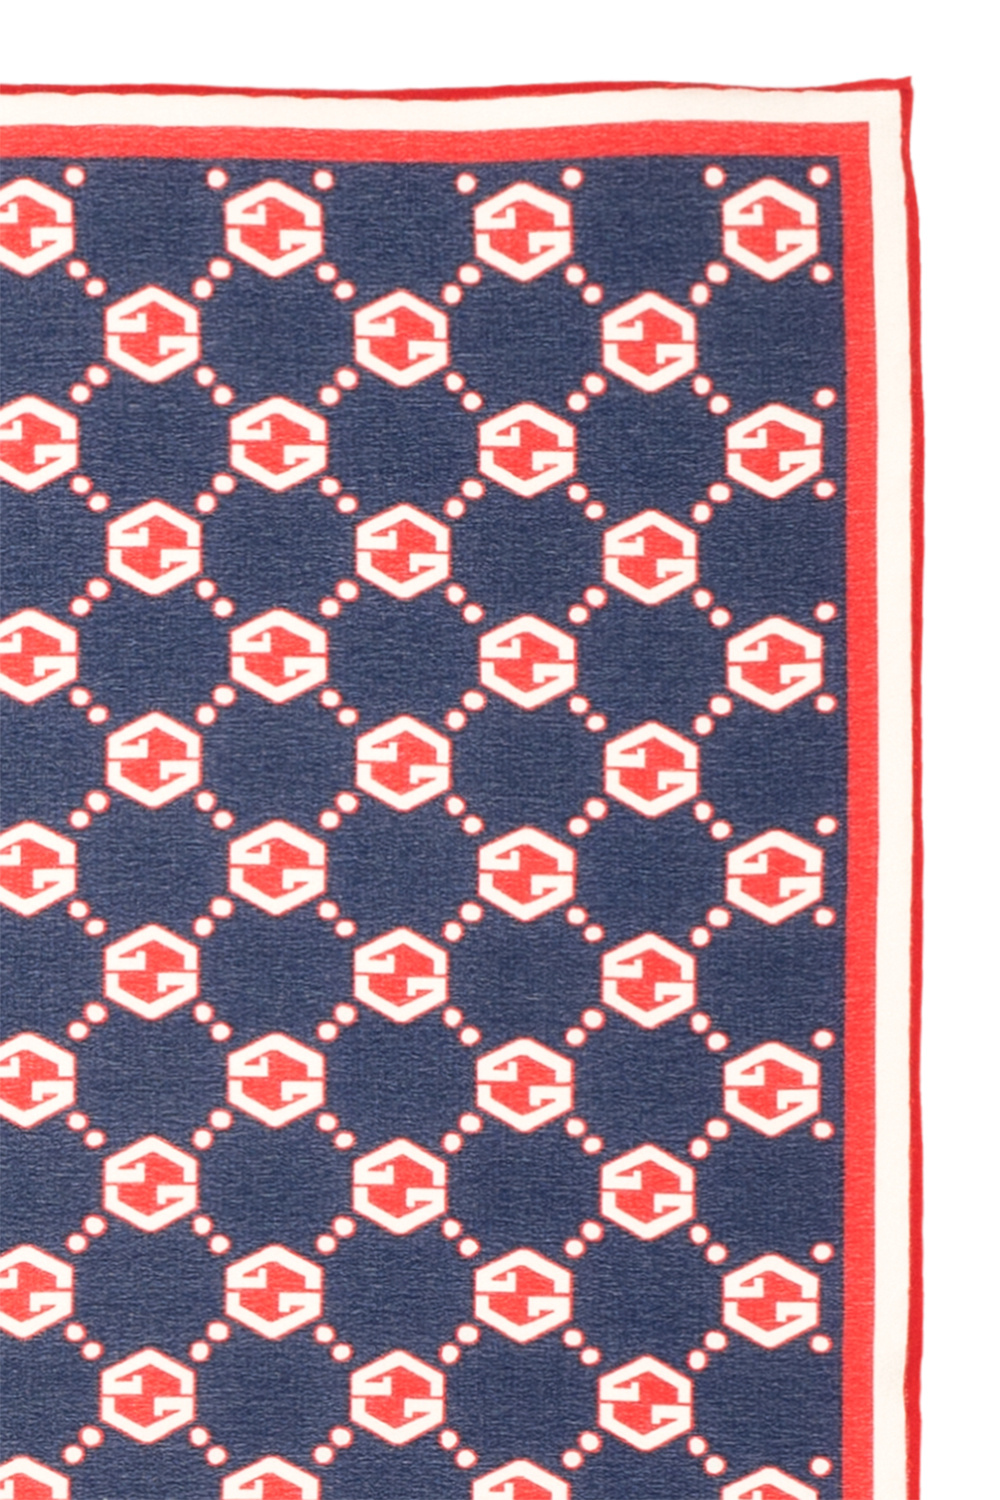 GUCCI 2021-22FW Gg hexagon print silk pocket square (660076 4G005 4174)